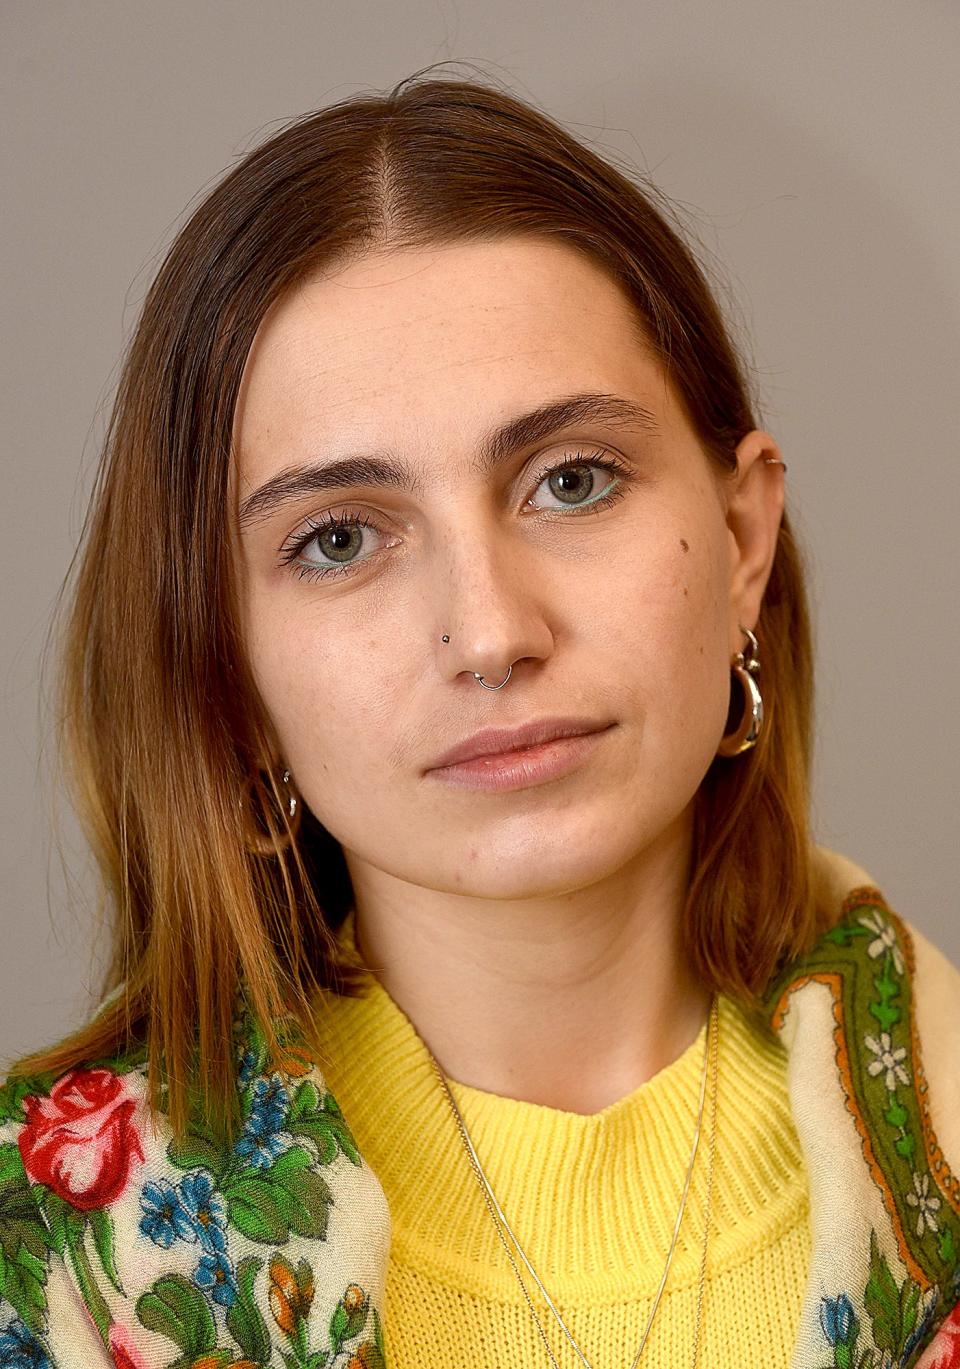 Irynka Hromotska, a Fulbright Scholar from Ukraine studying at MU, is helping raise funds to support Ukrainians fighting the Russian invasion of Ukraine.